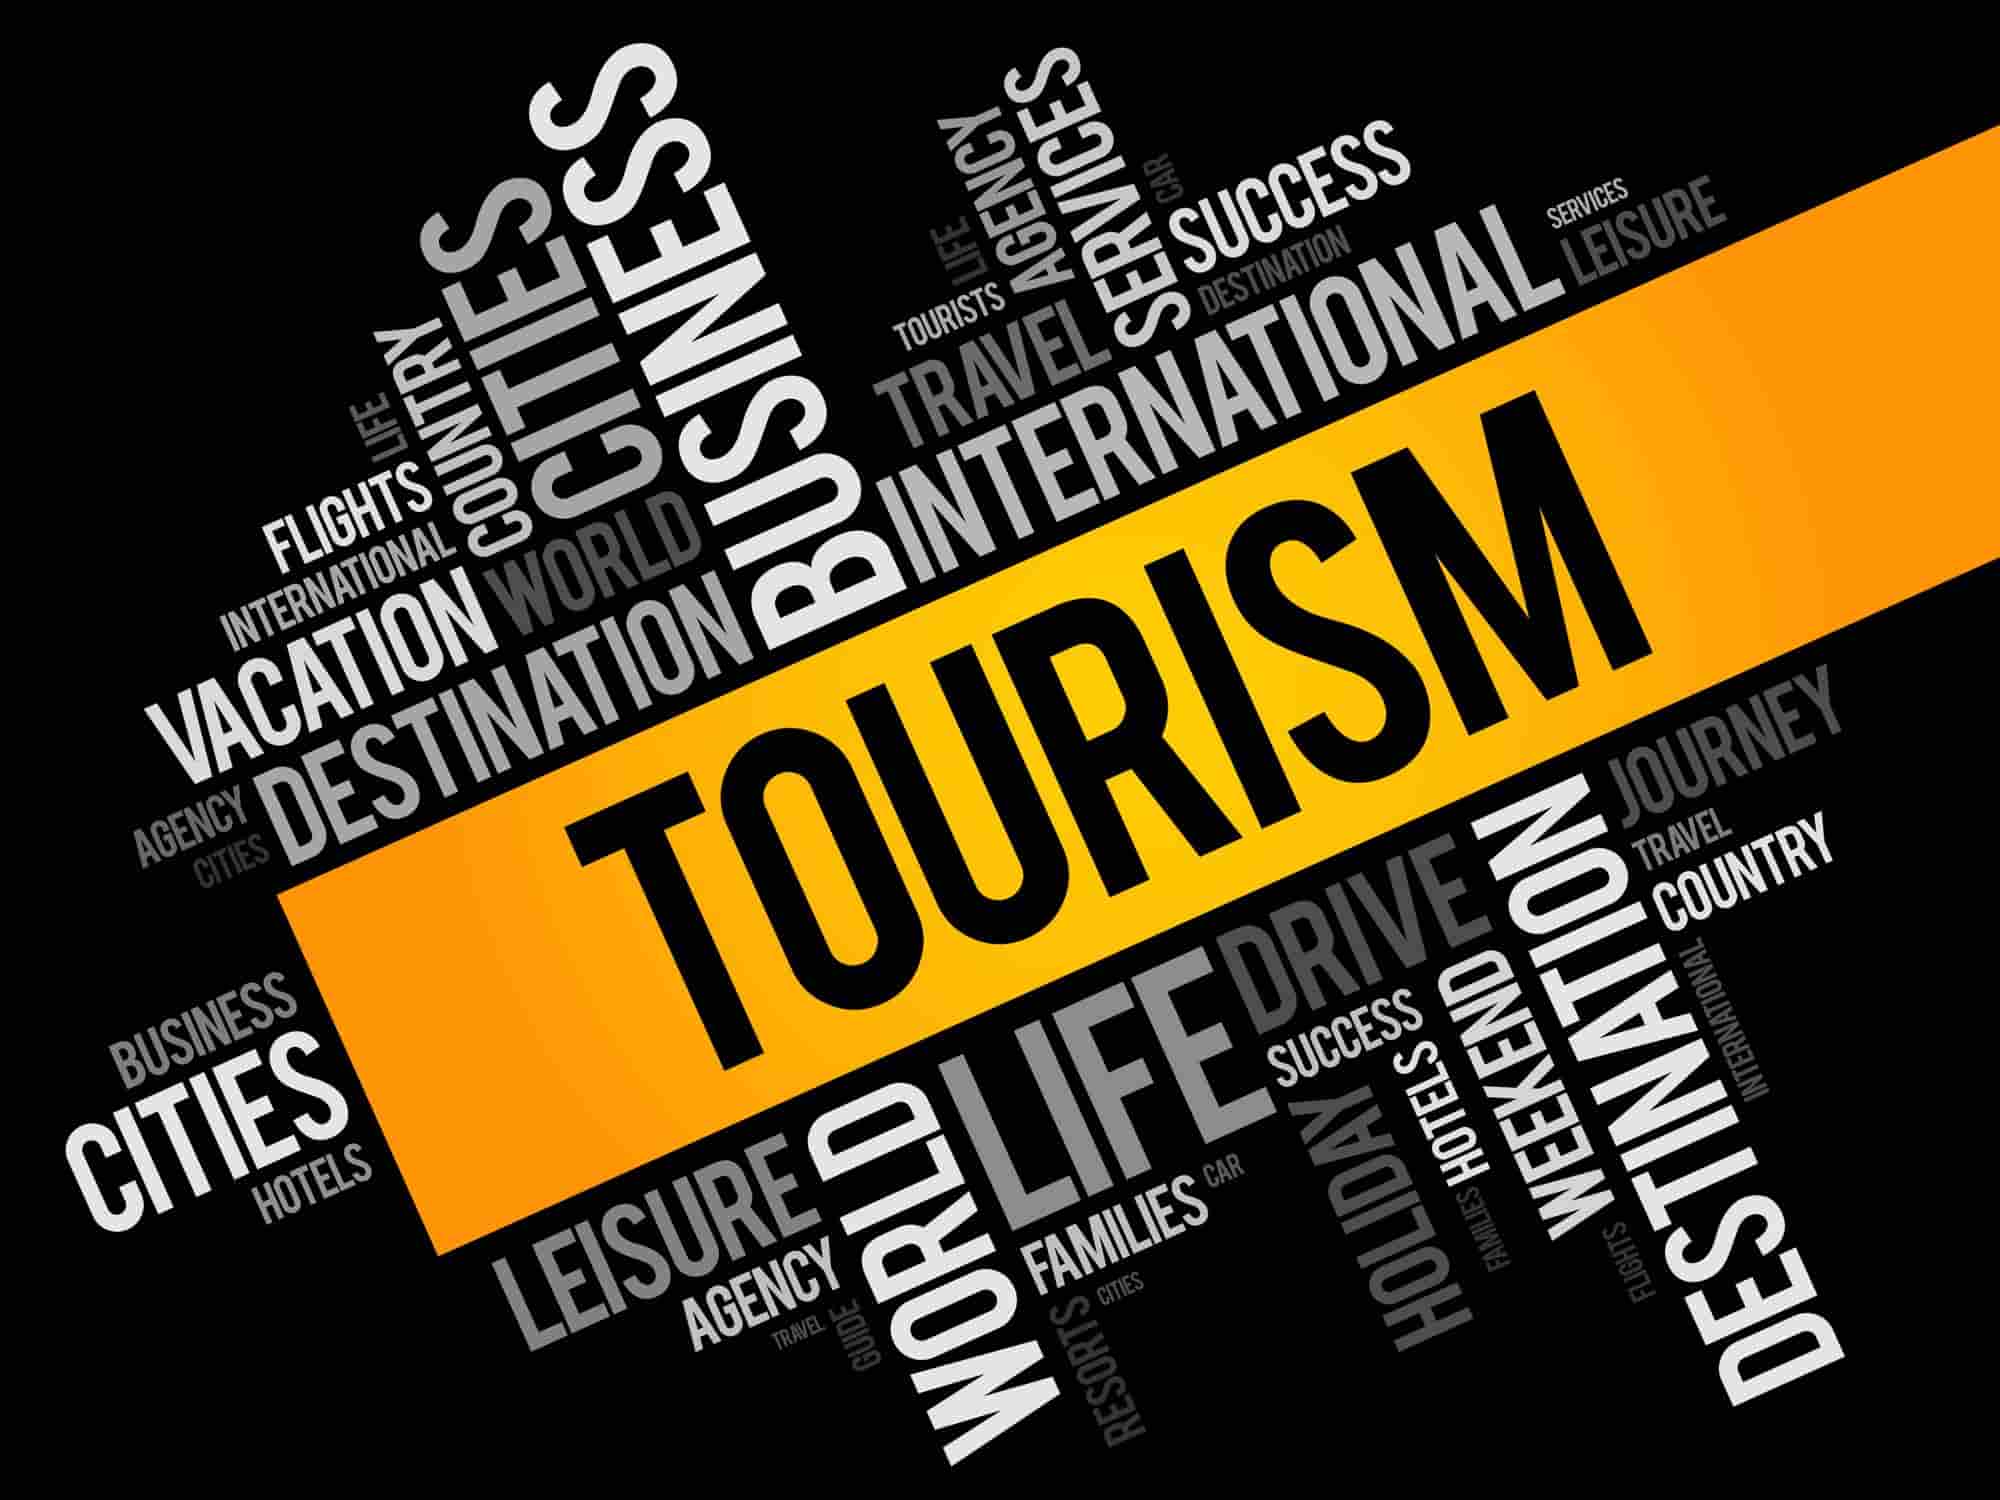 Georgia: National Tourism Administration held a training session credit: google/okcredit